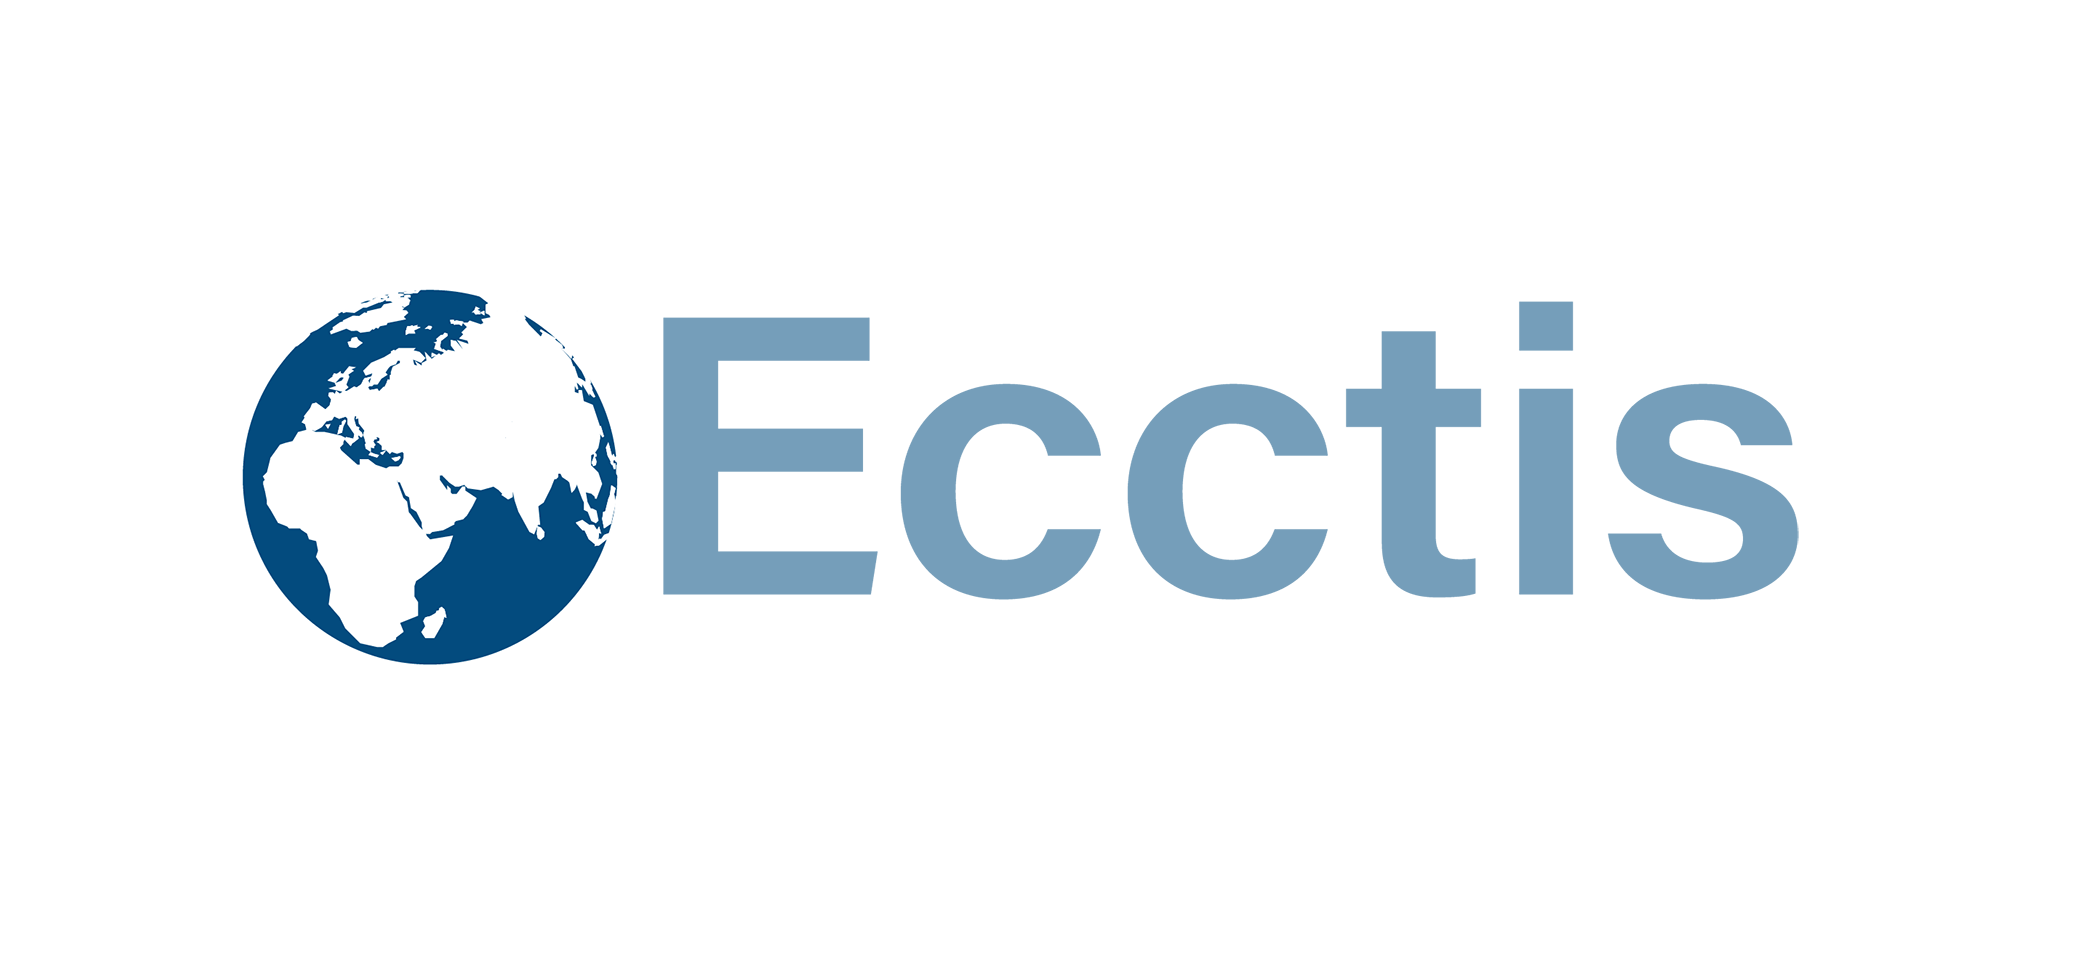 Ecctis logo Overseas Qualifications